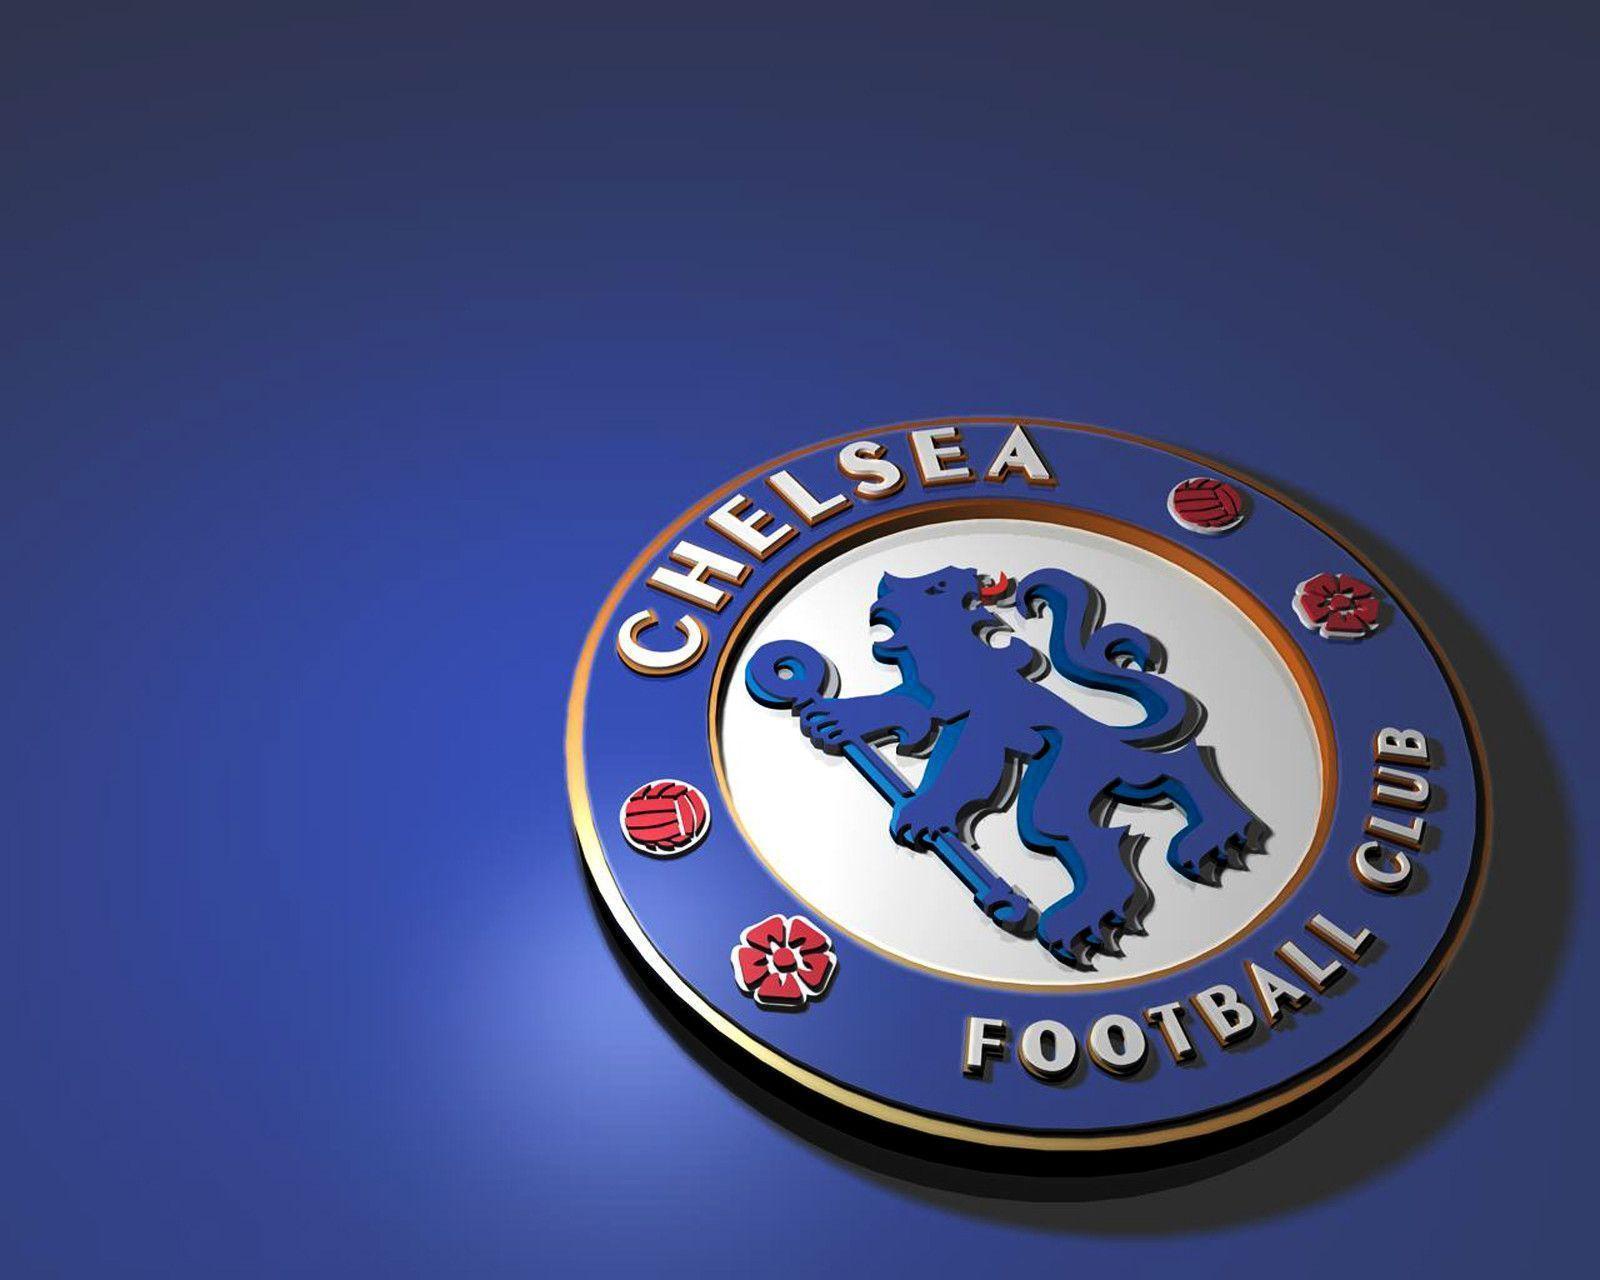 Chelsea_Football_Club_3D_Logo_